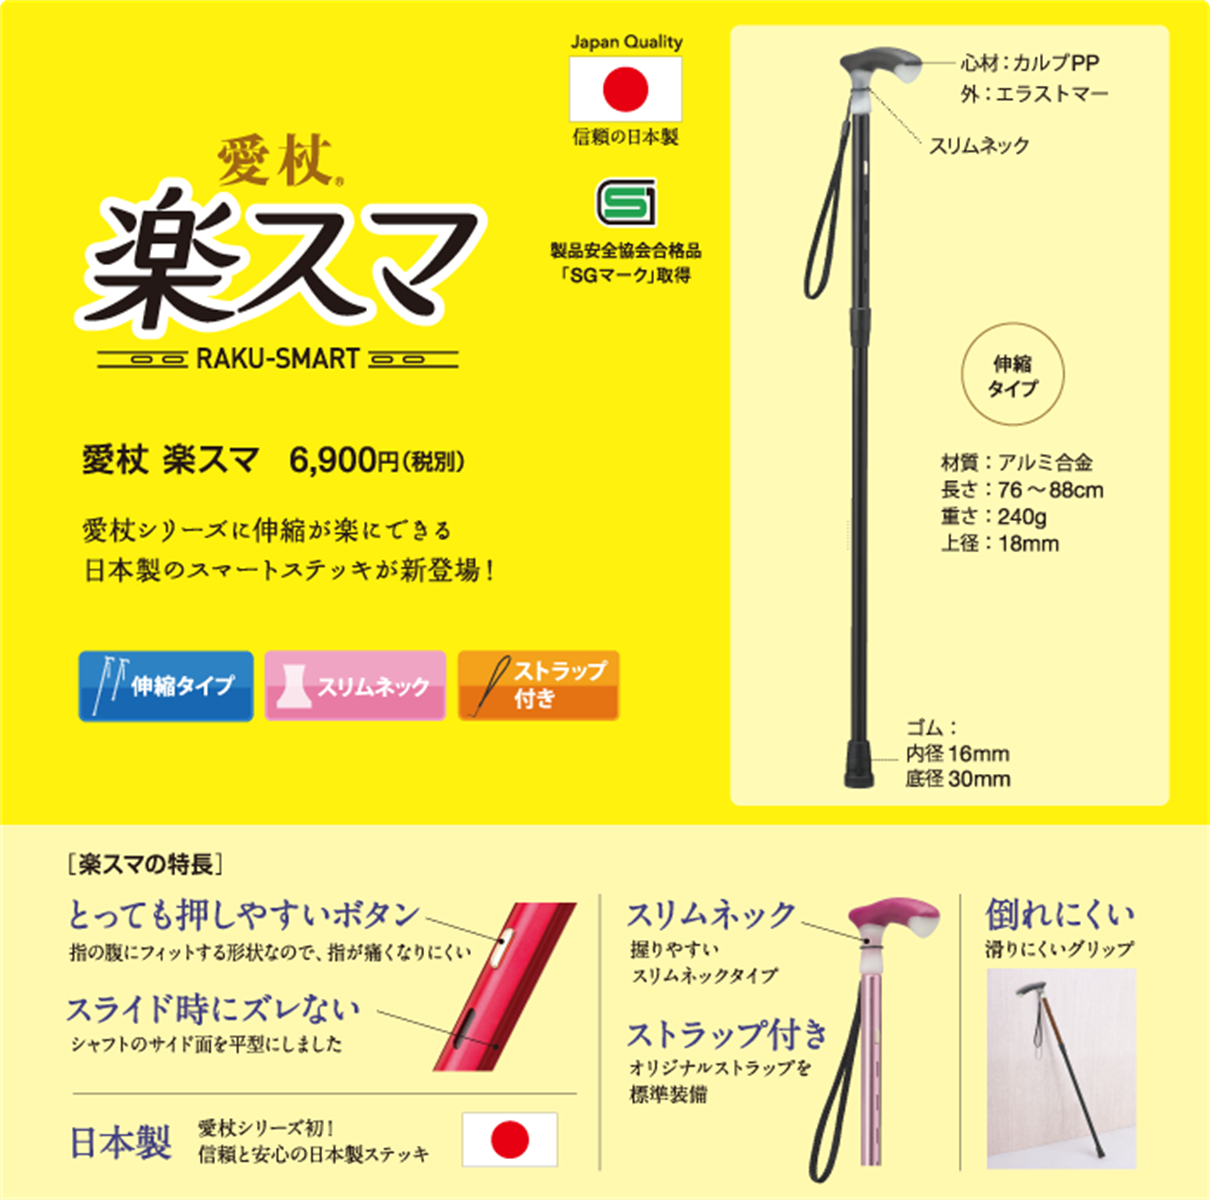 Super Light Crutches (Japan Made)